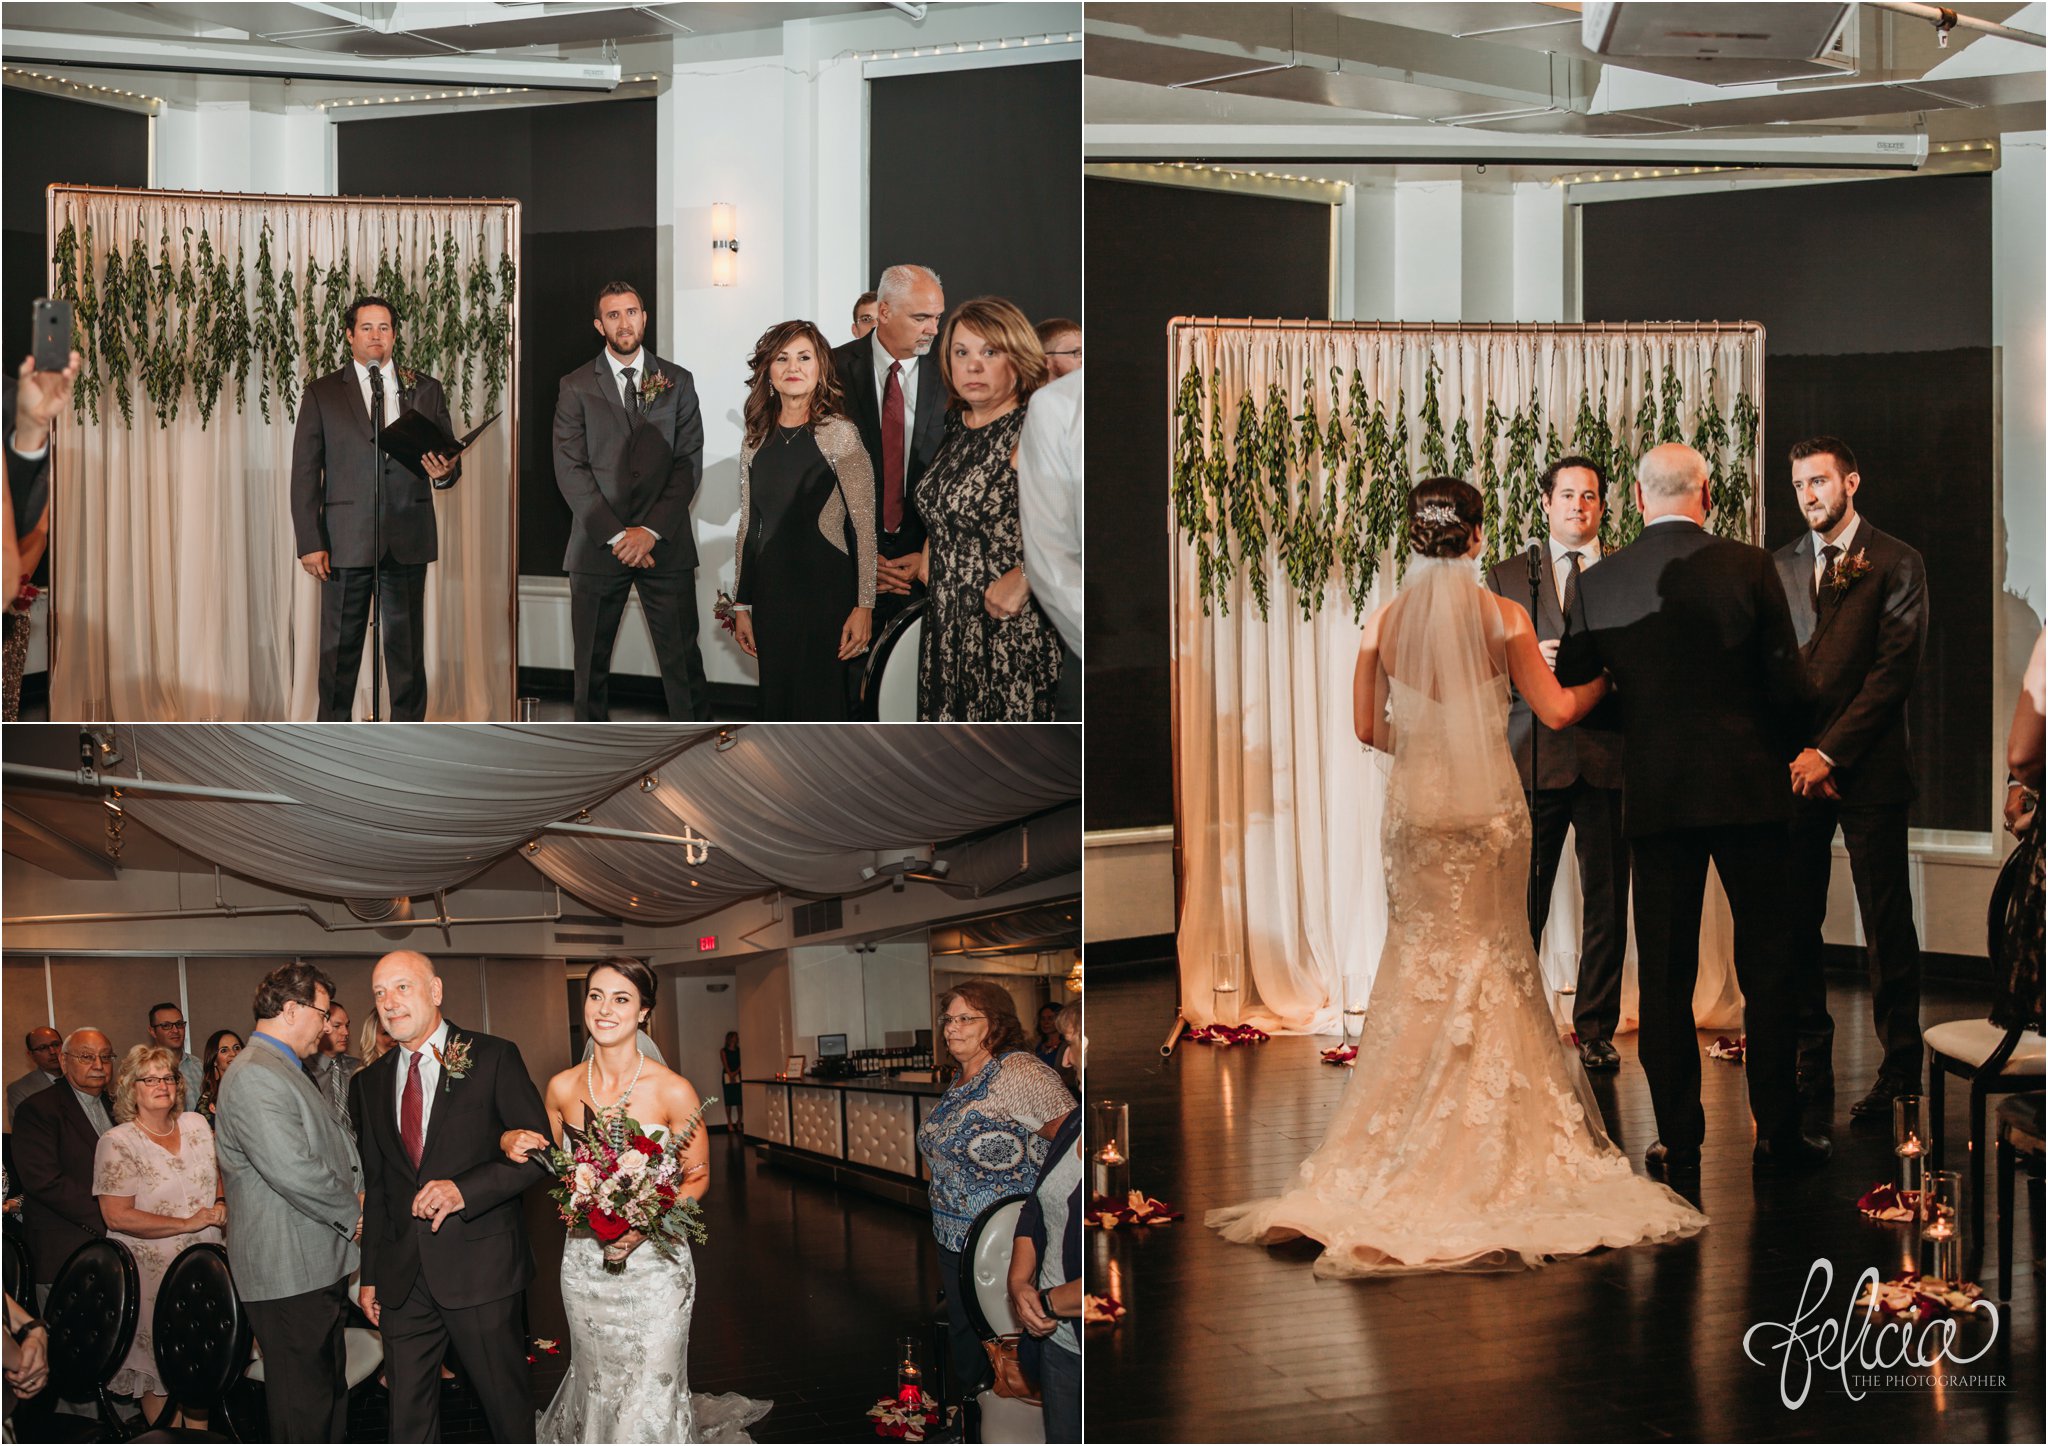 images by feliciathephotographer.com | wedding photographer | kansas city | ceremony | walking down the aisle | giving away the bride | plaza venue | 